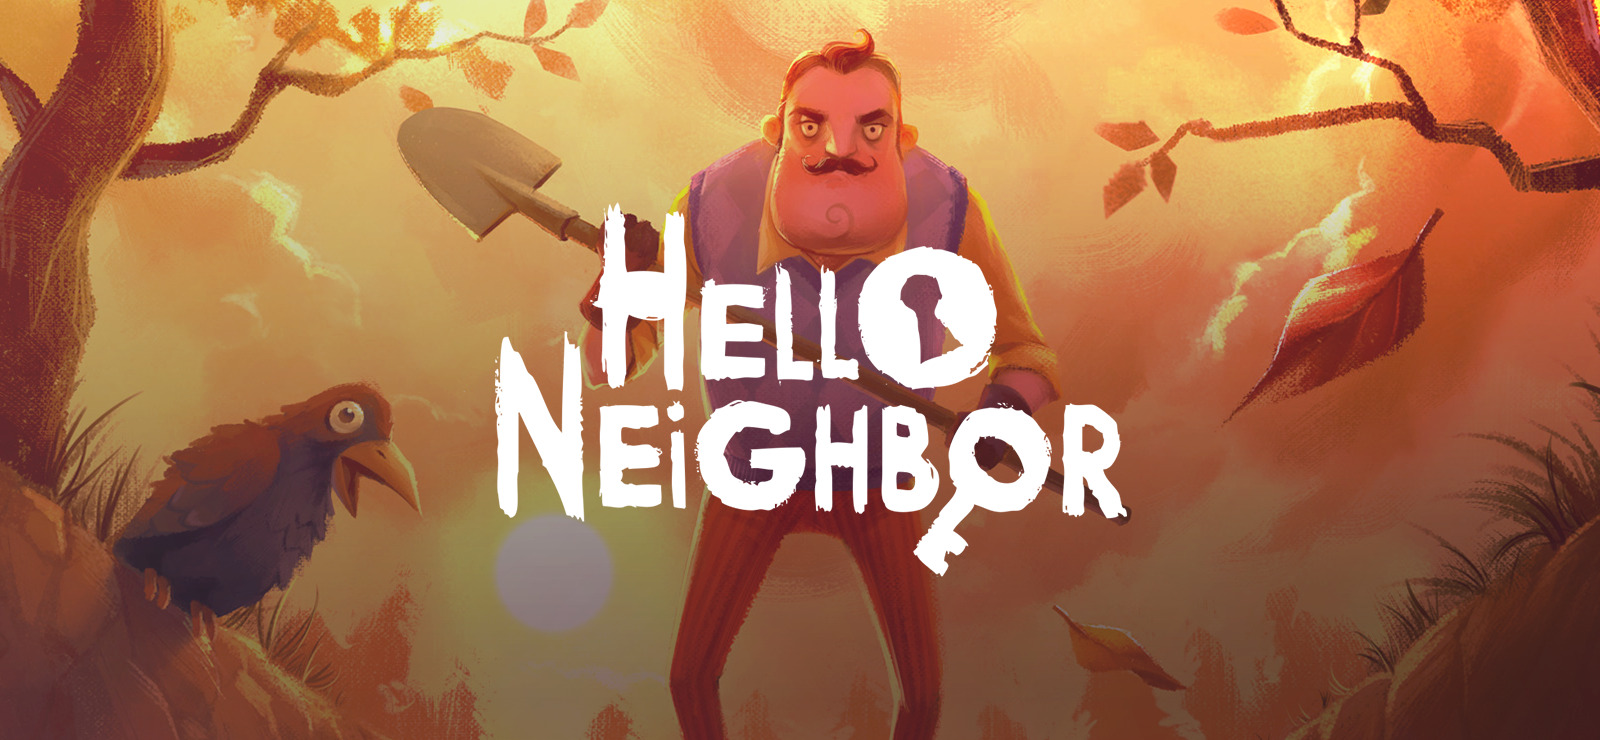 hello hello neighbor free online game